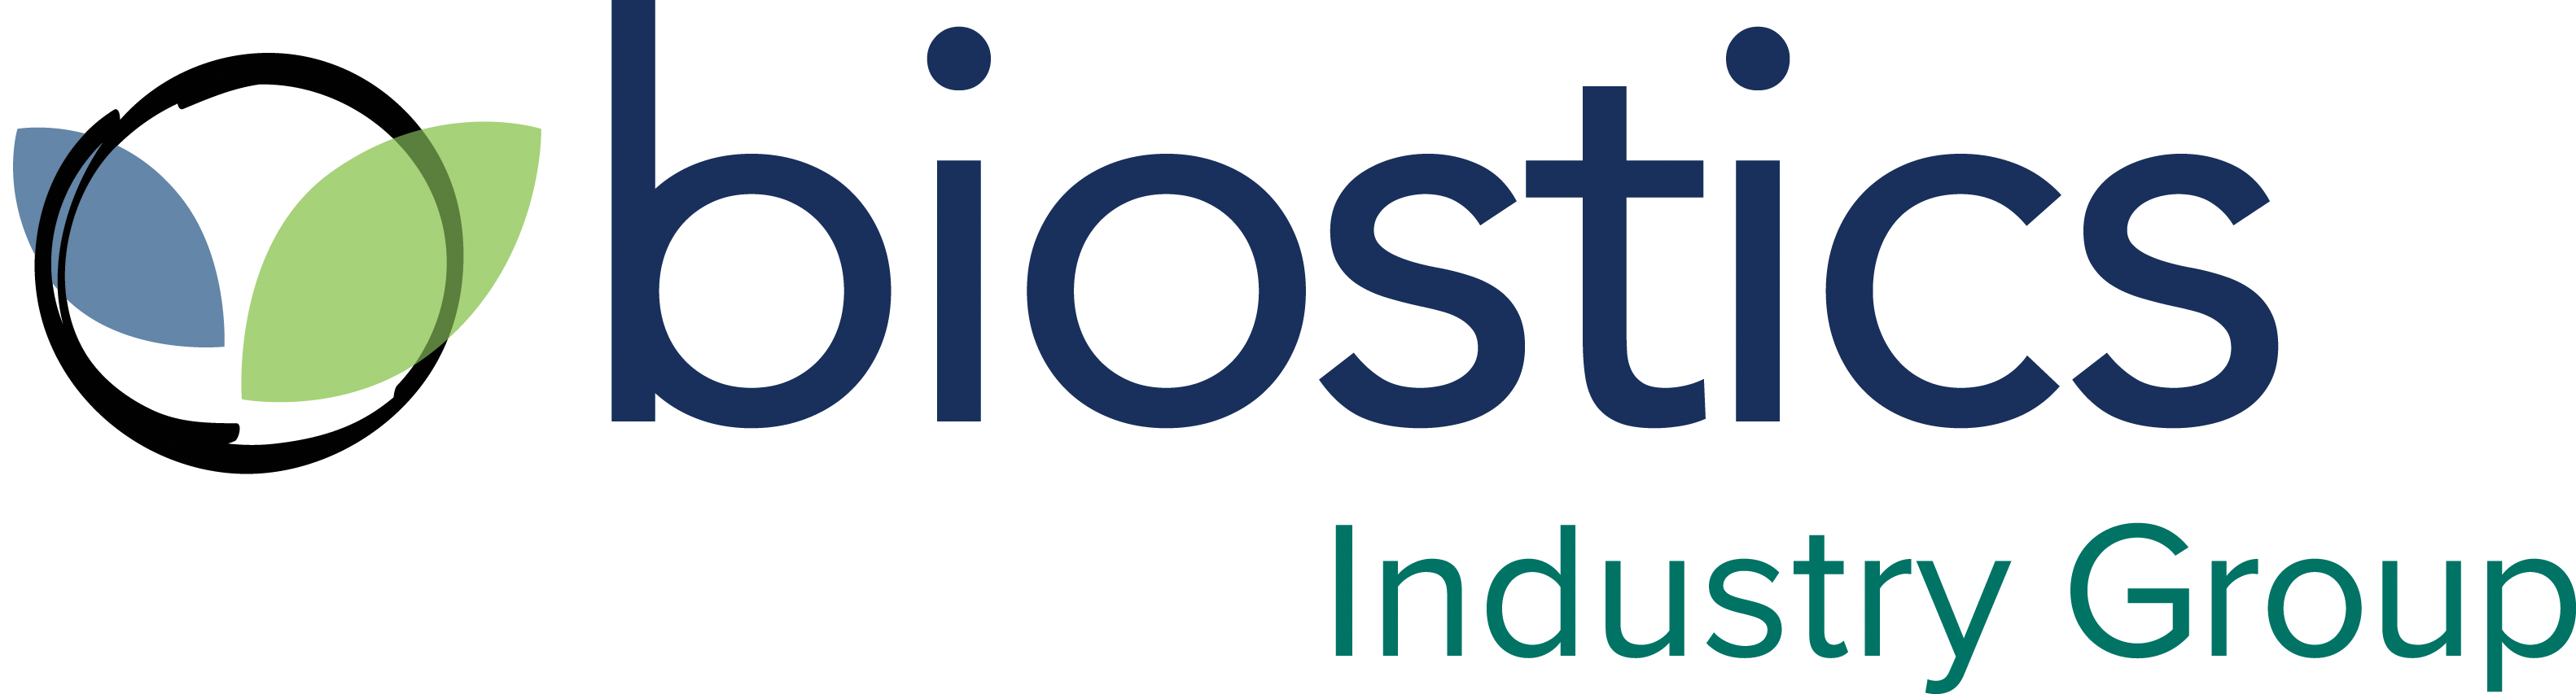 Biostics Industry Group